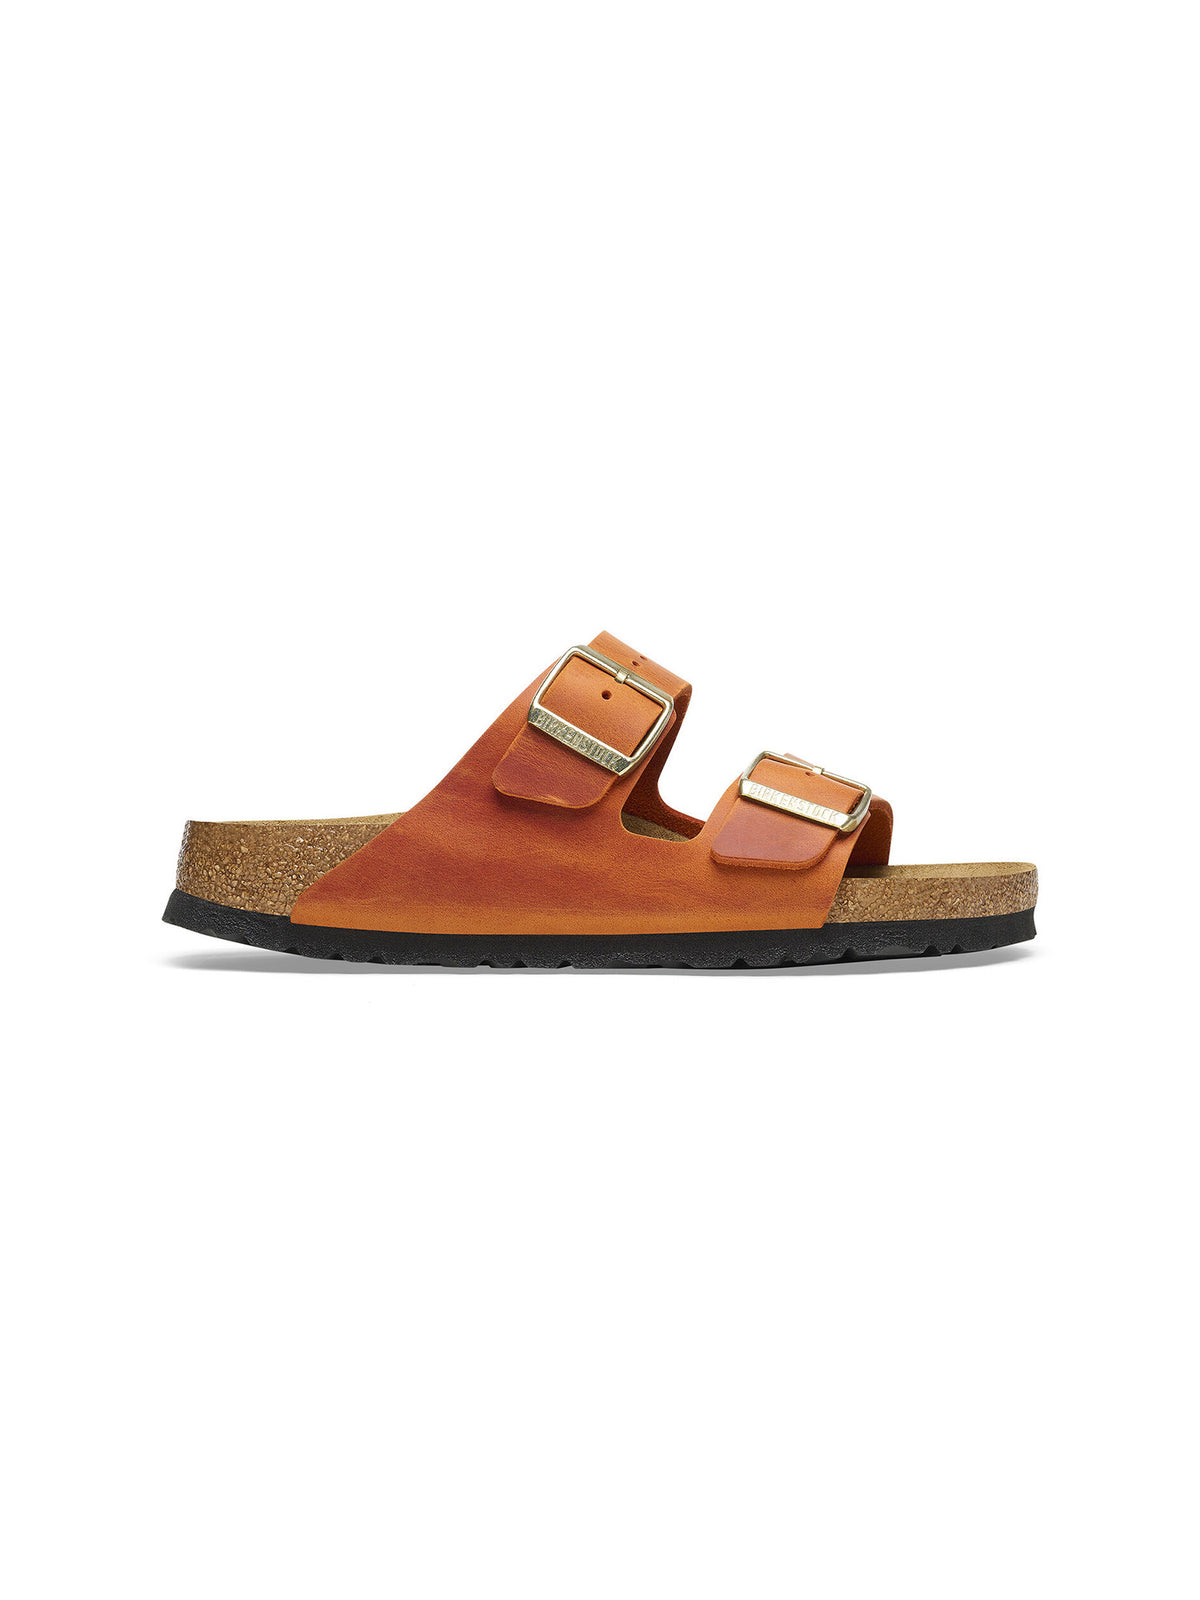 birkenstock arizona sandal in burnt orange oiled leather